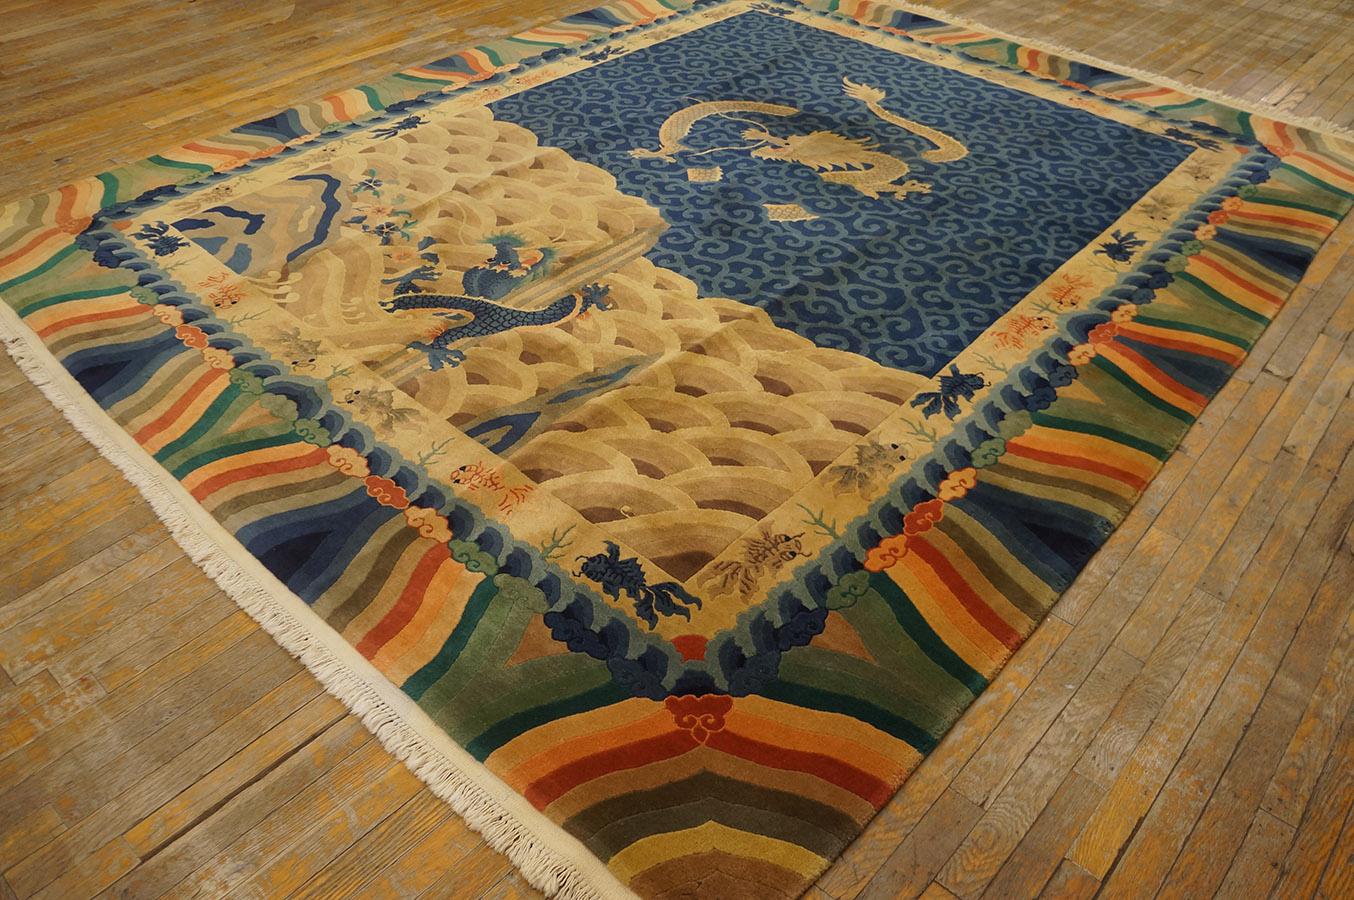 1920s Chinese Art Deco Carpet By Nichols Workshop (8' 6